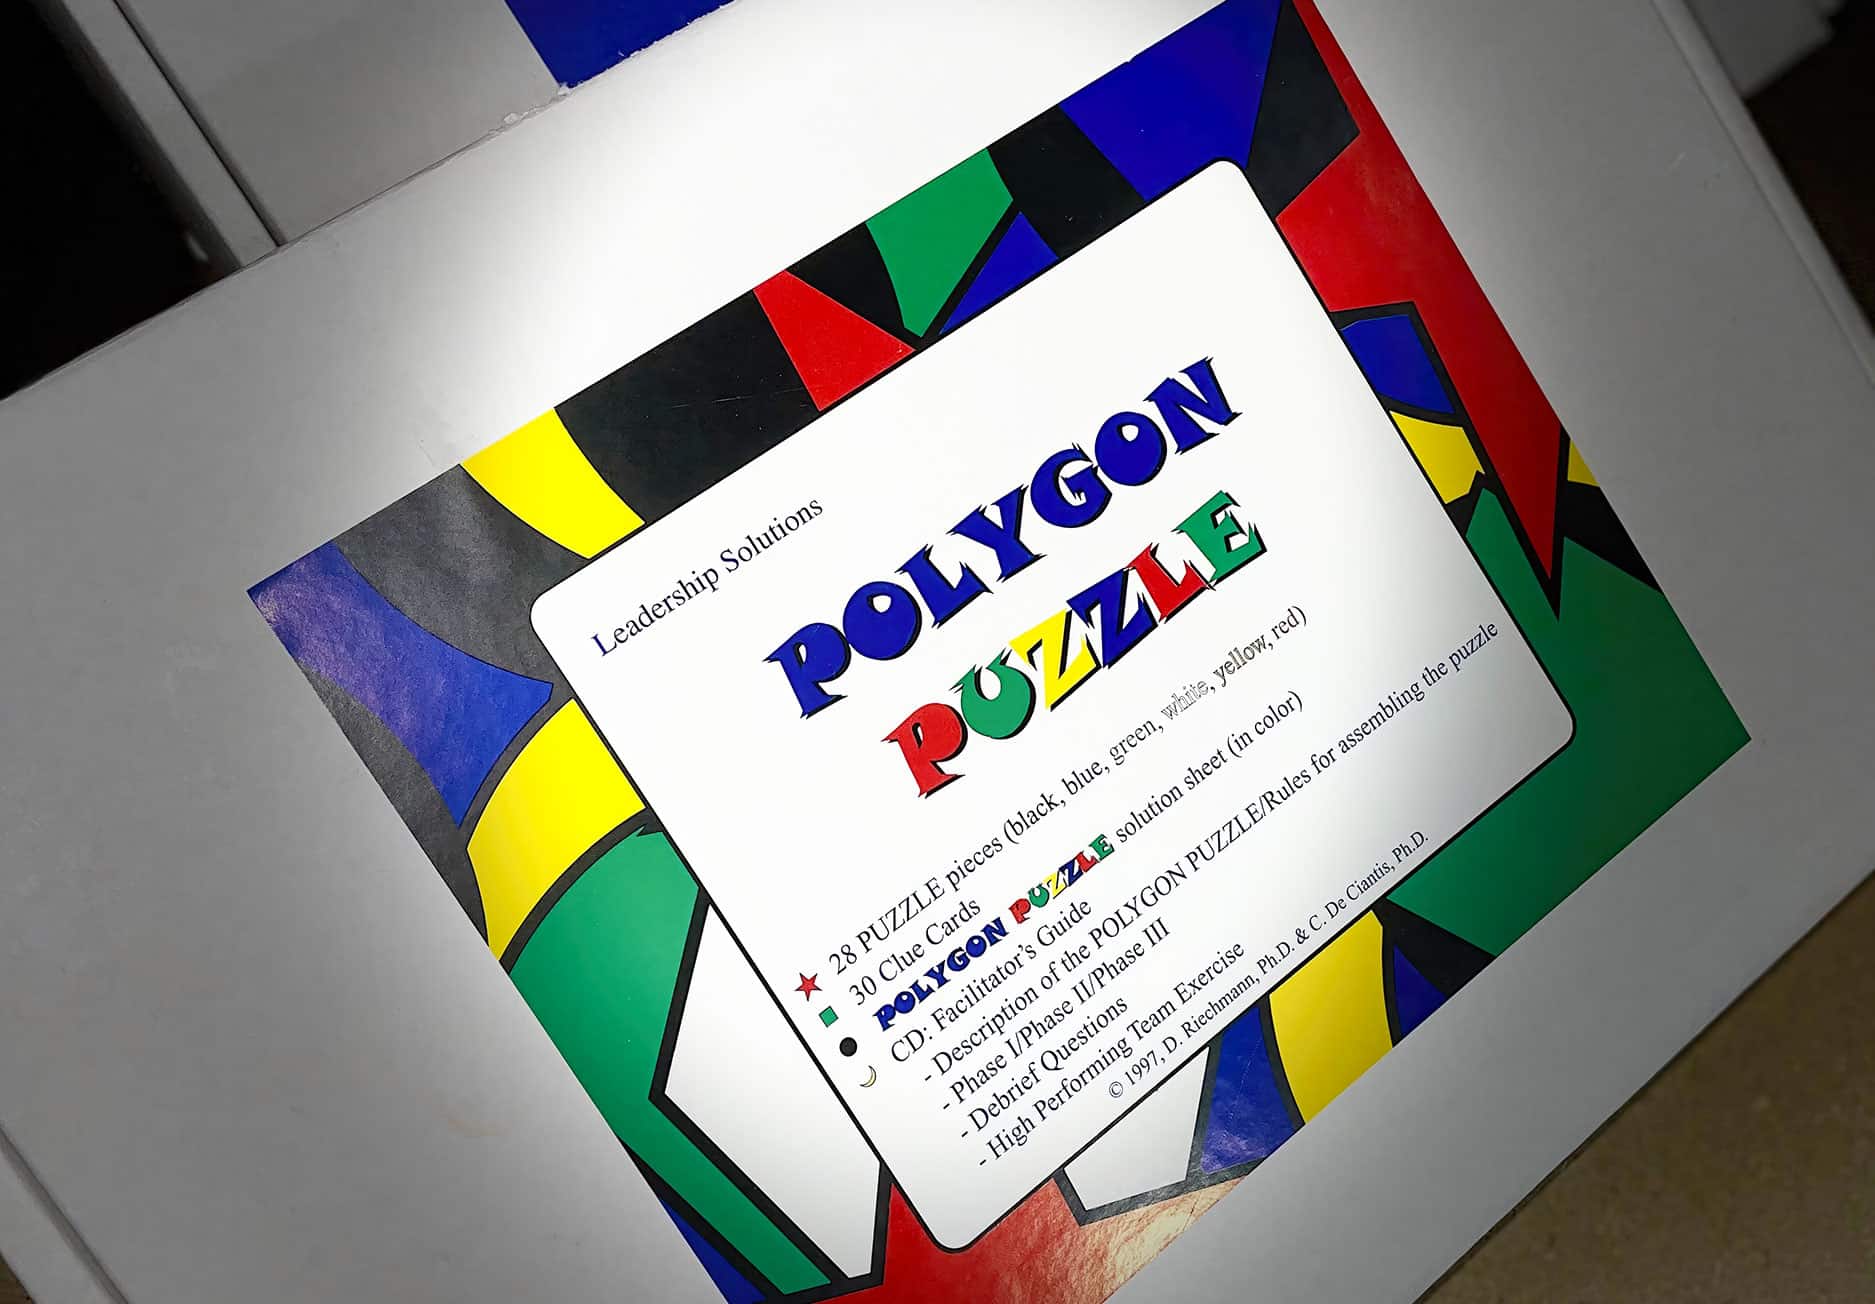 Polygon Puzzle simulation